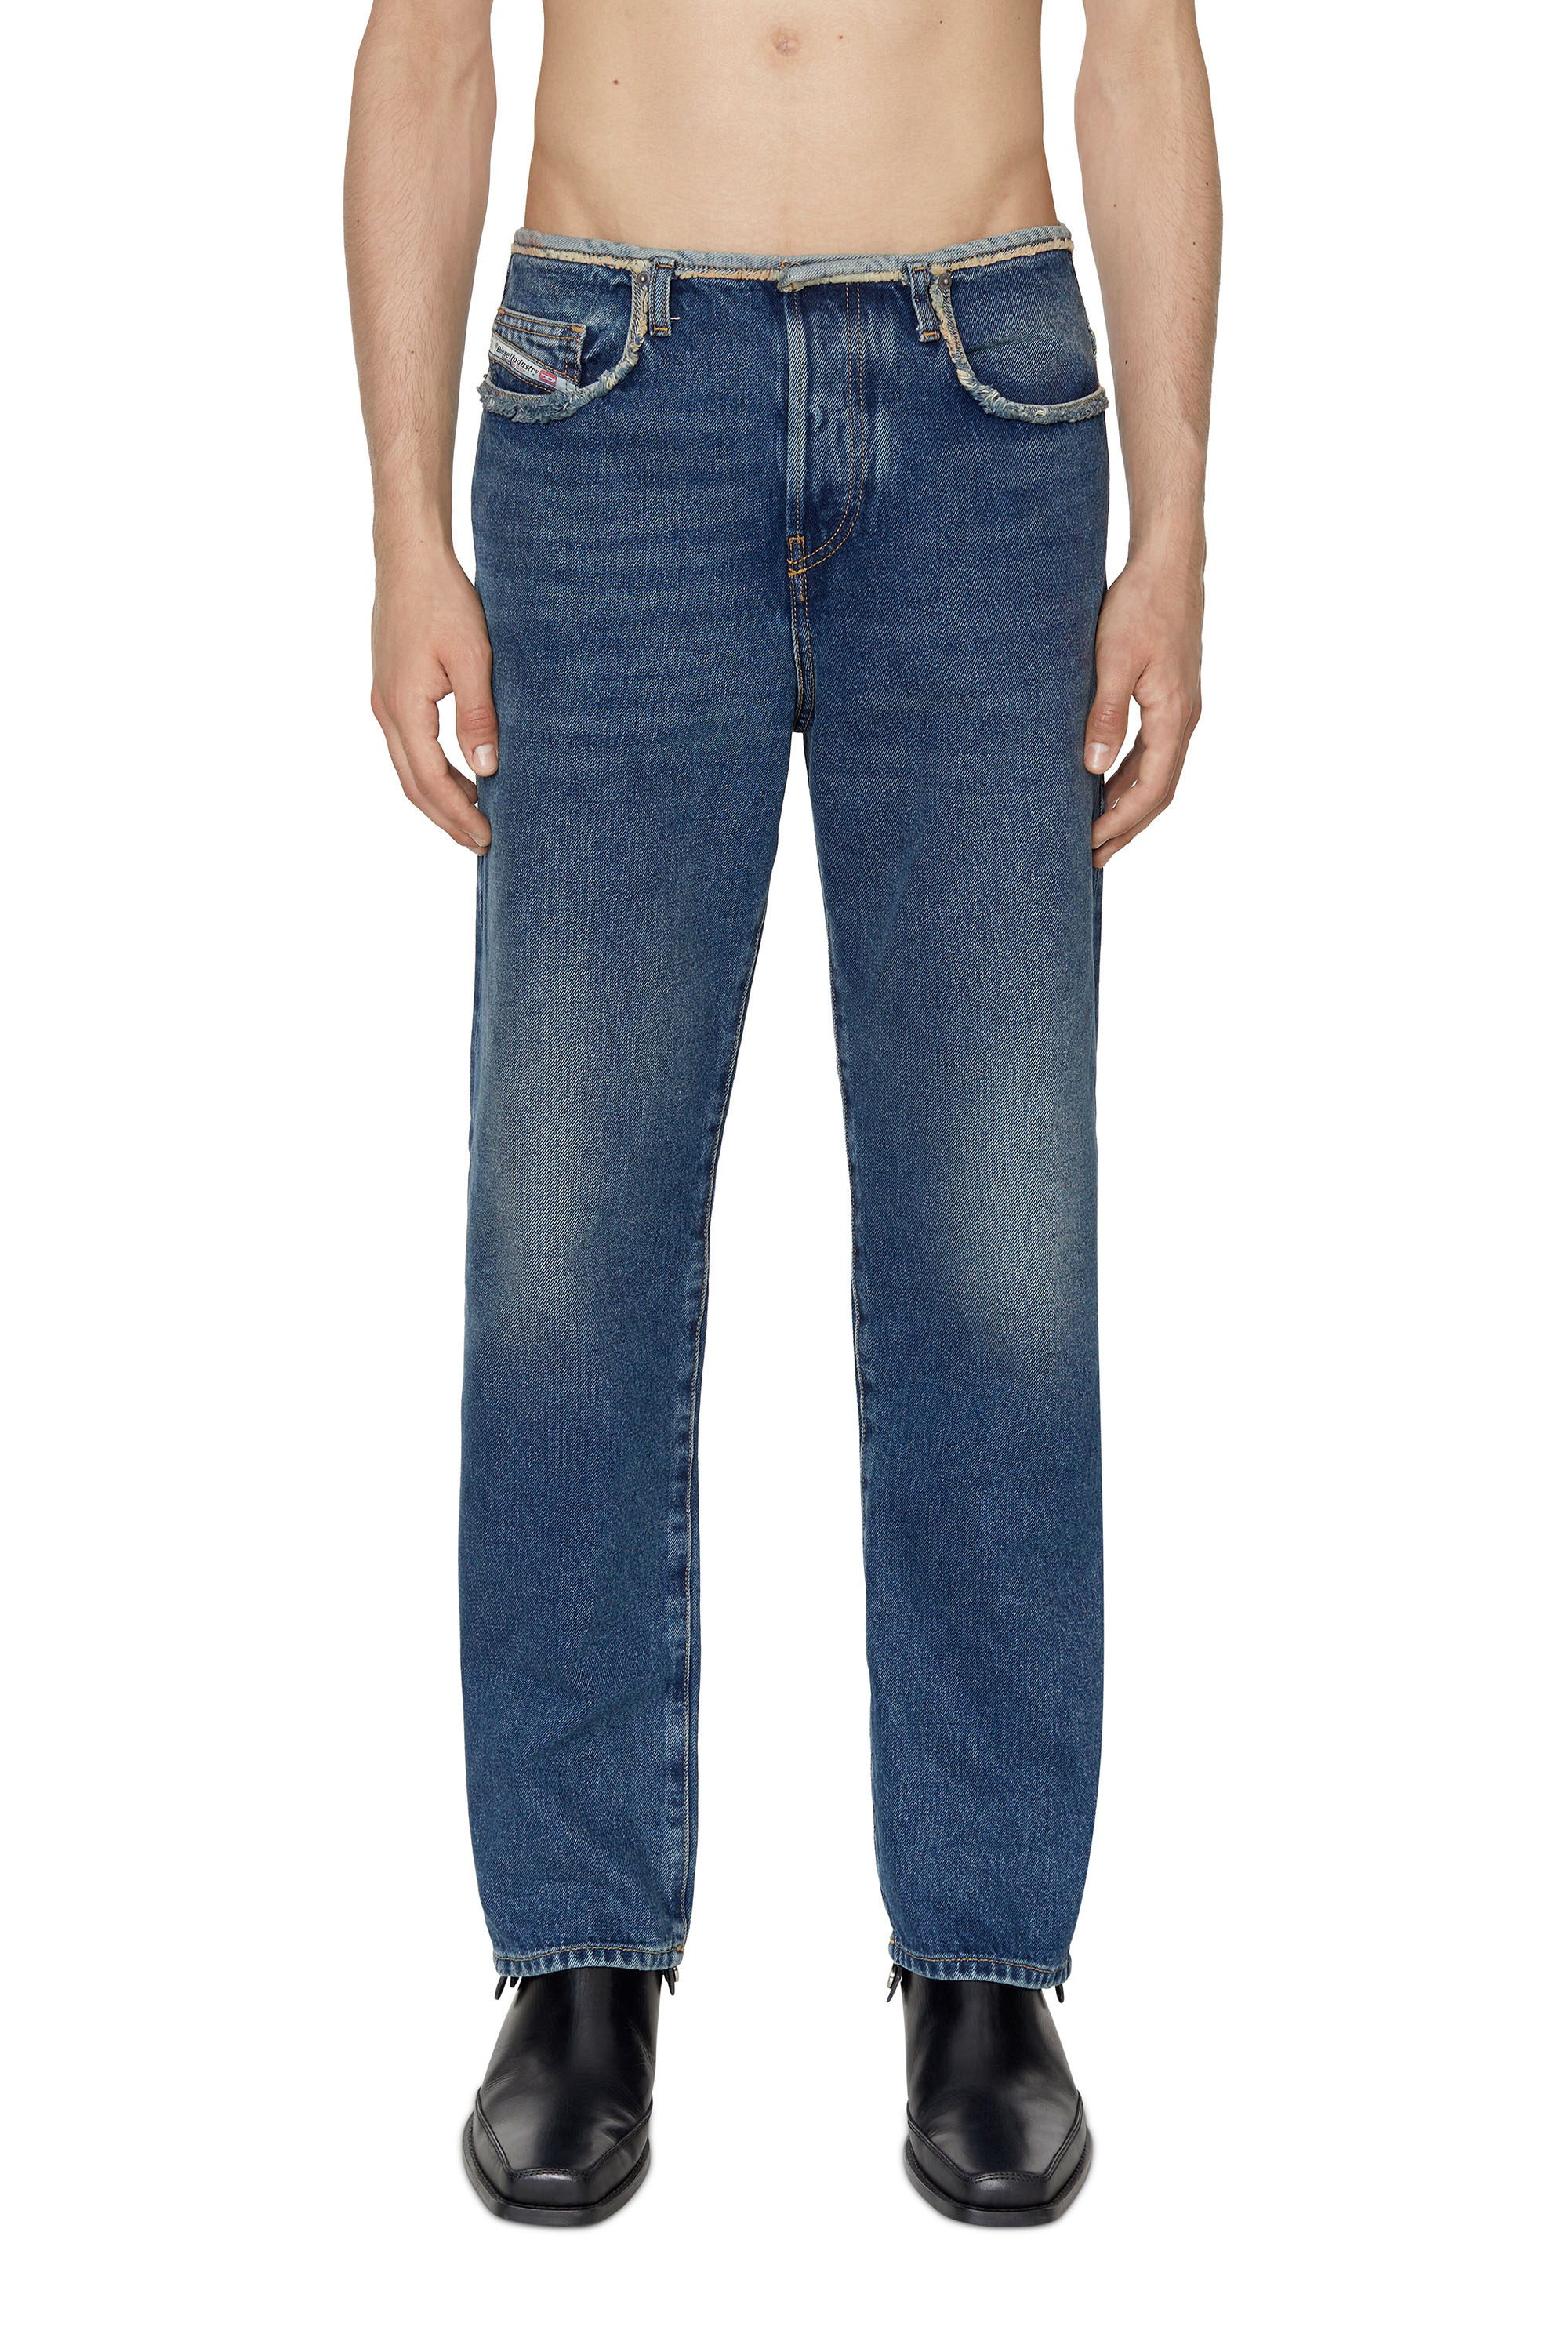 D-Pend 007F2 Straight Jeans, Bleu moyen - Jeans